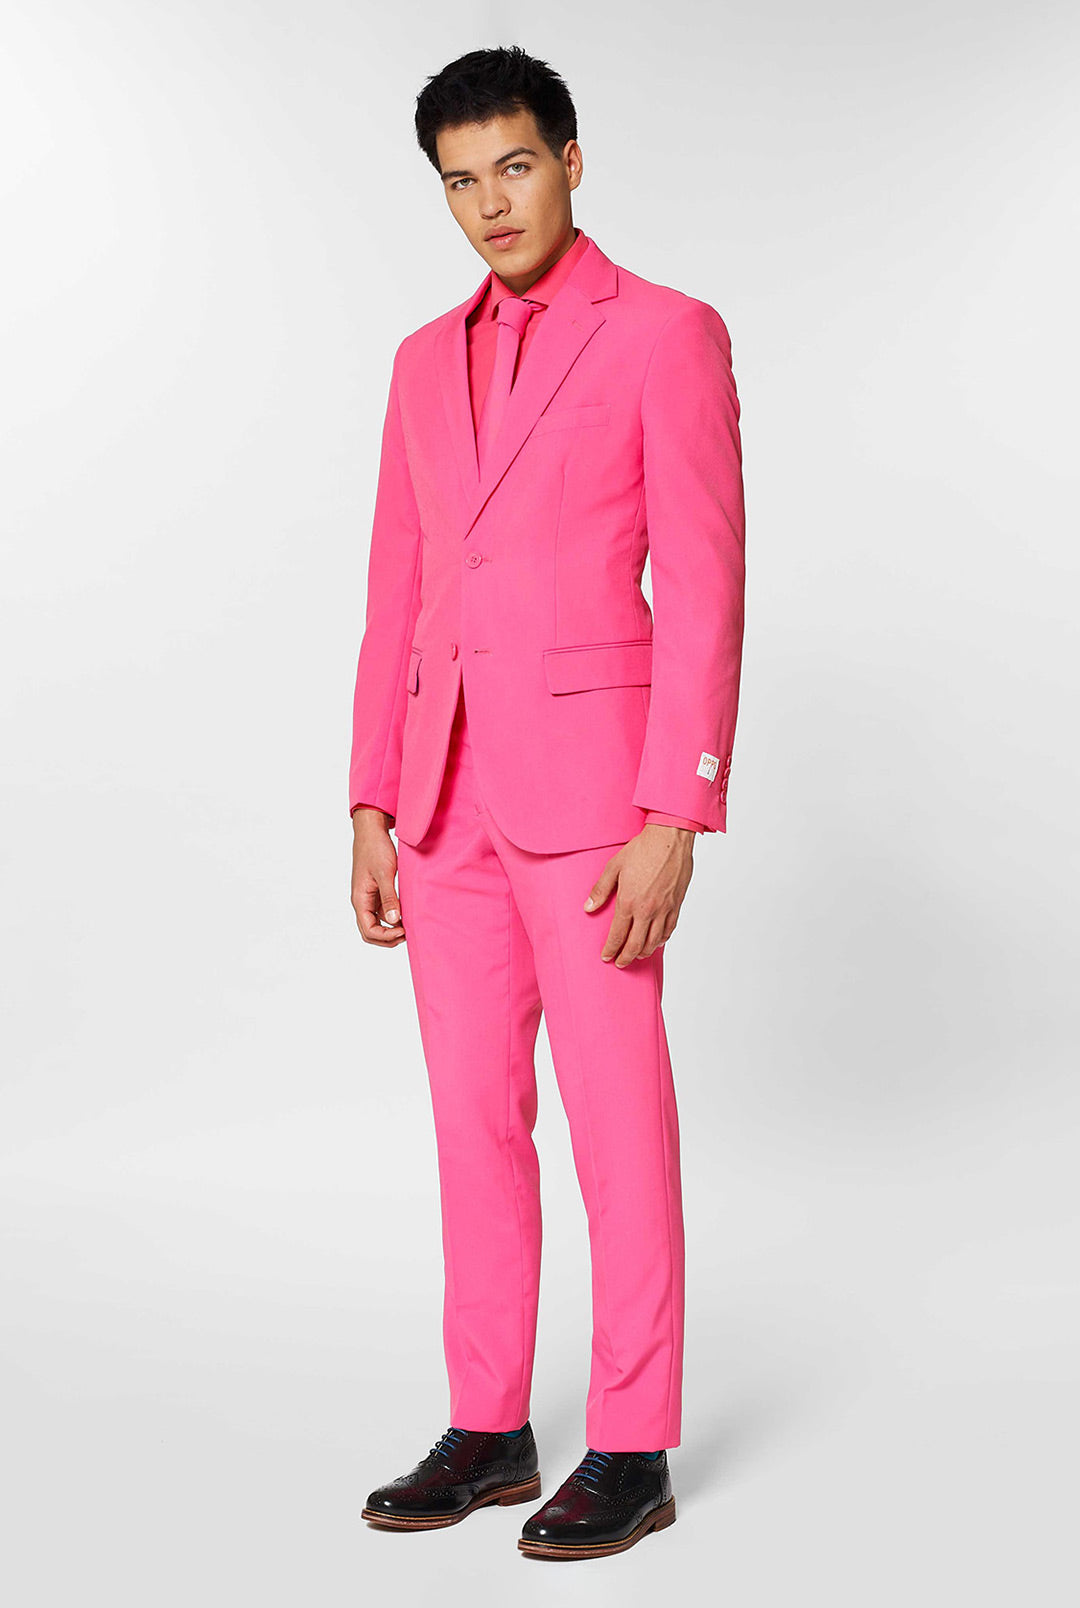 Mr. Pink | Pink Suit | As seen in Beyoncé's music video Spirit | OppoSuits